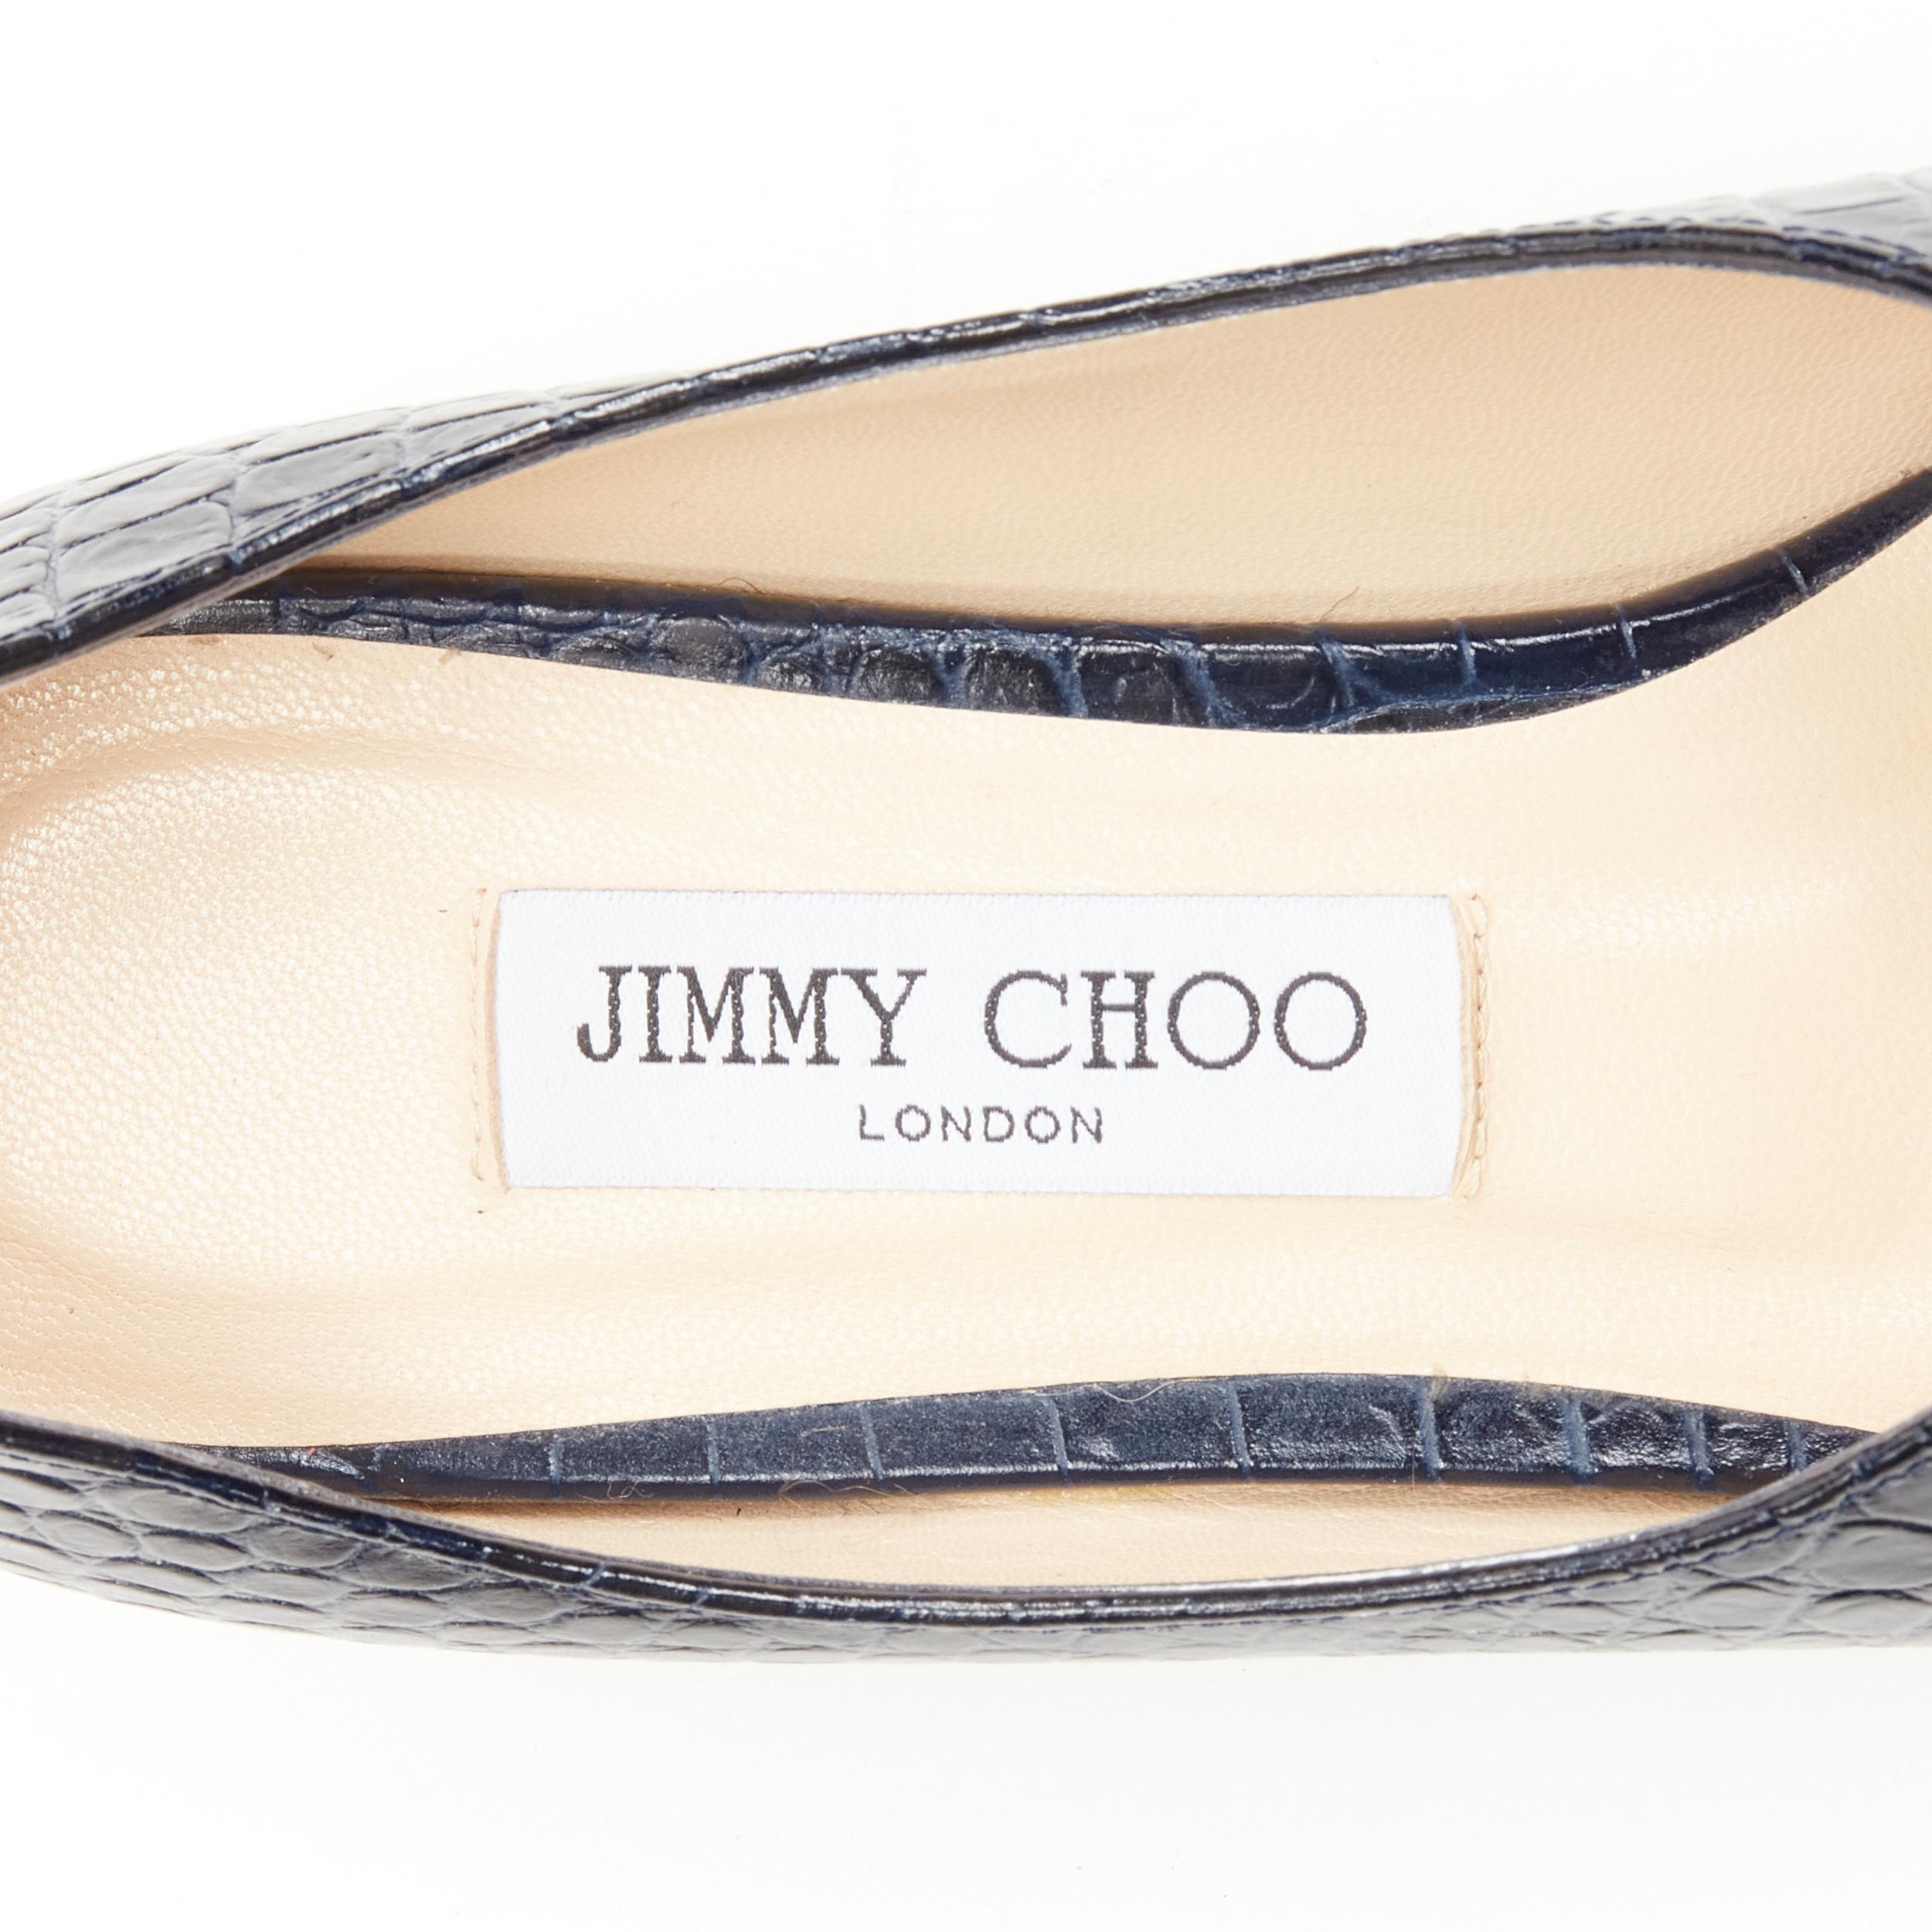 JIMMY CHOO black navy mock croc leather square toe JC charm flats EU38 For Sale 5